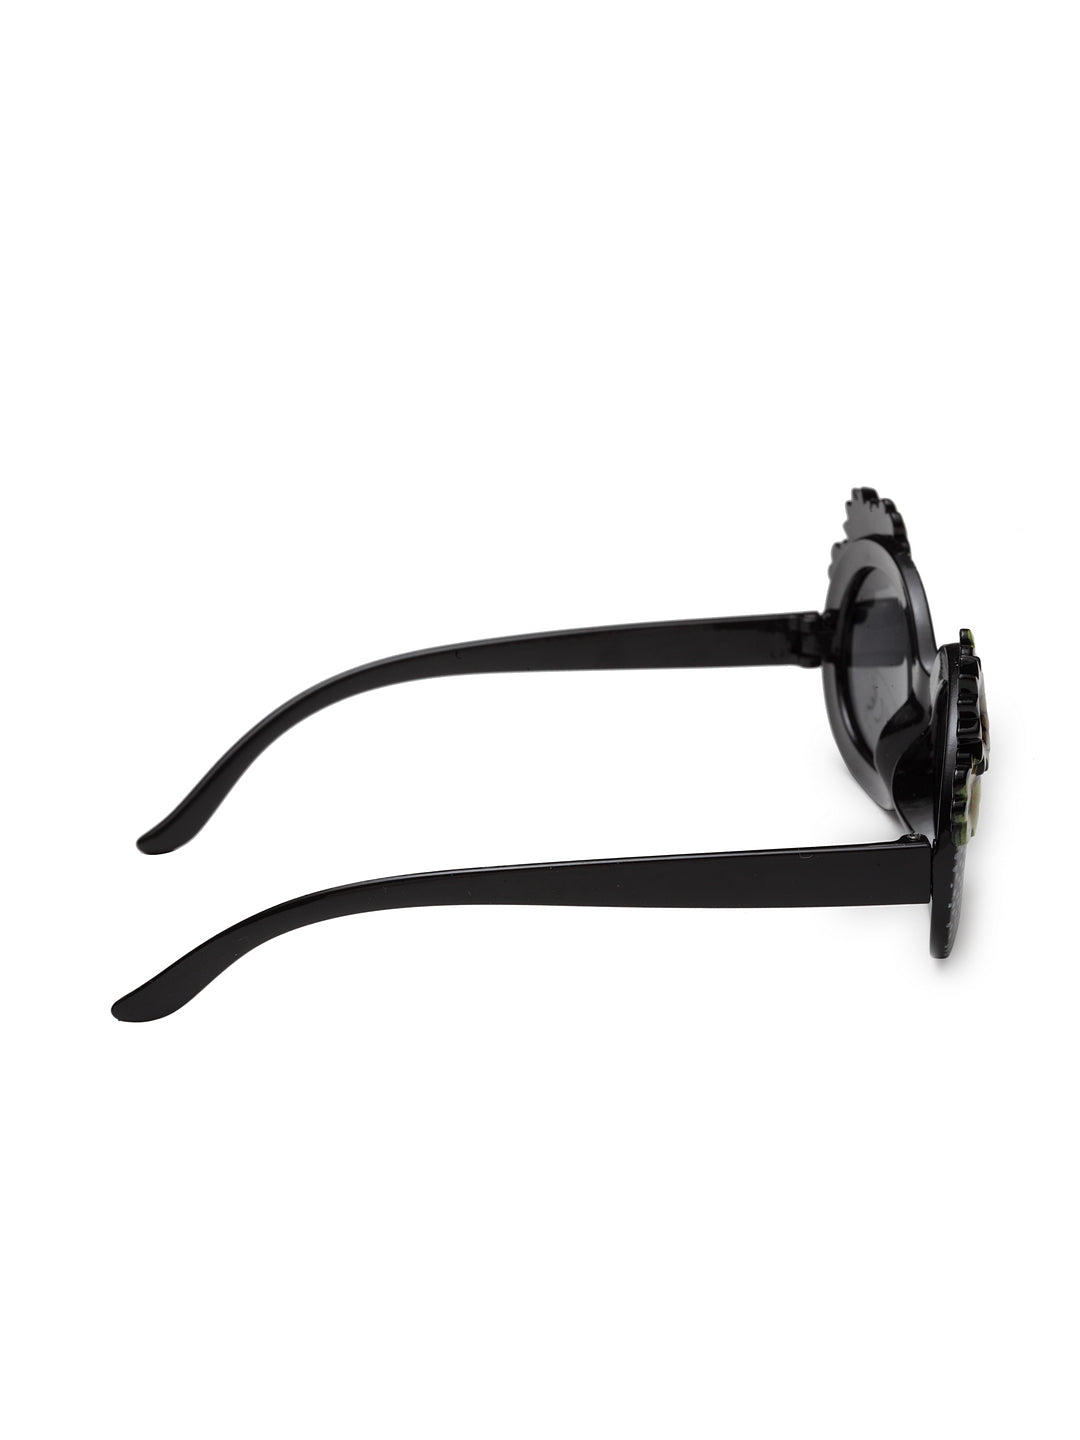 Stol'n Premium Attractive Fashionable UV-Protected Oval Shape Sunglasses  - Black